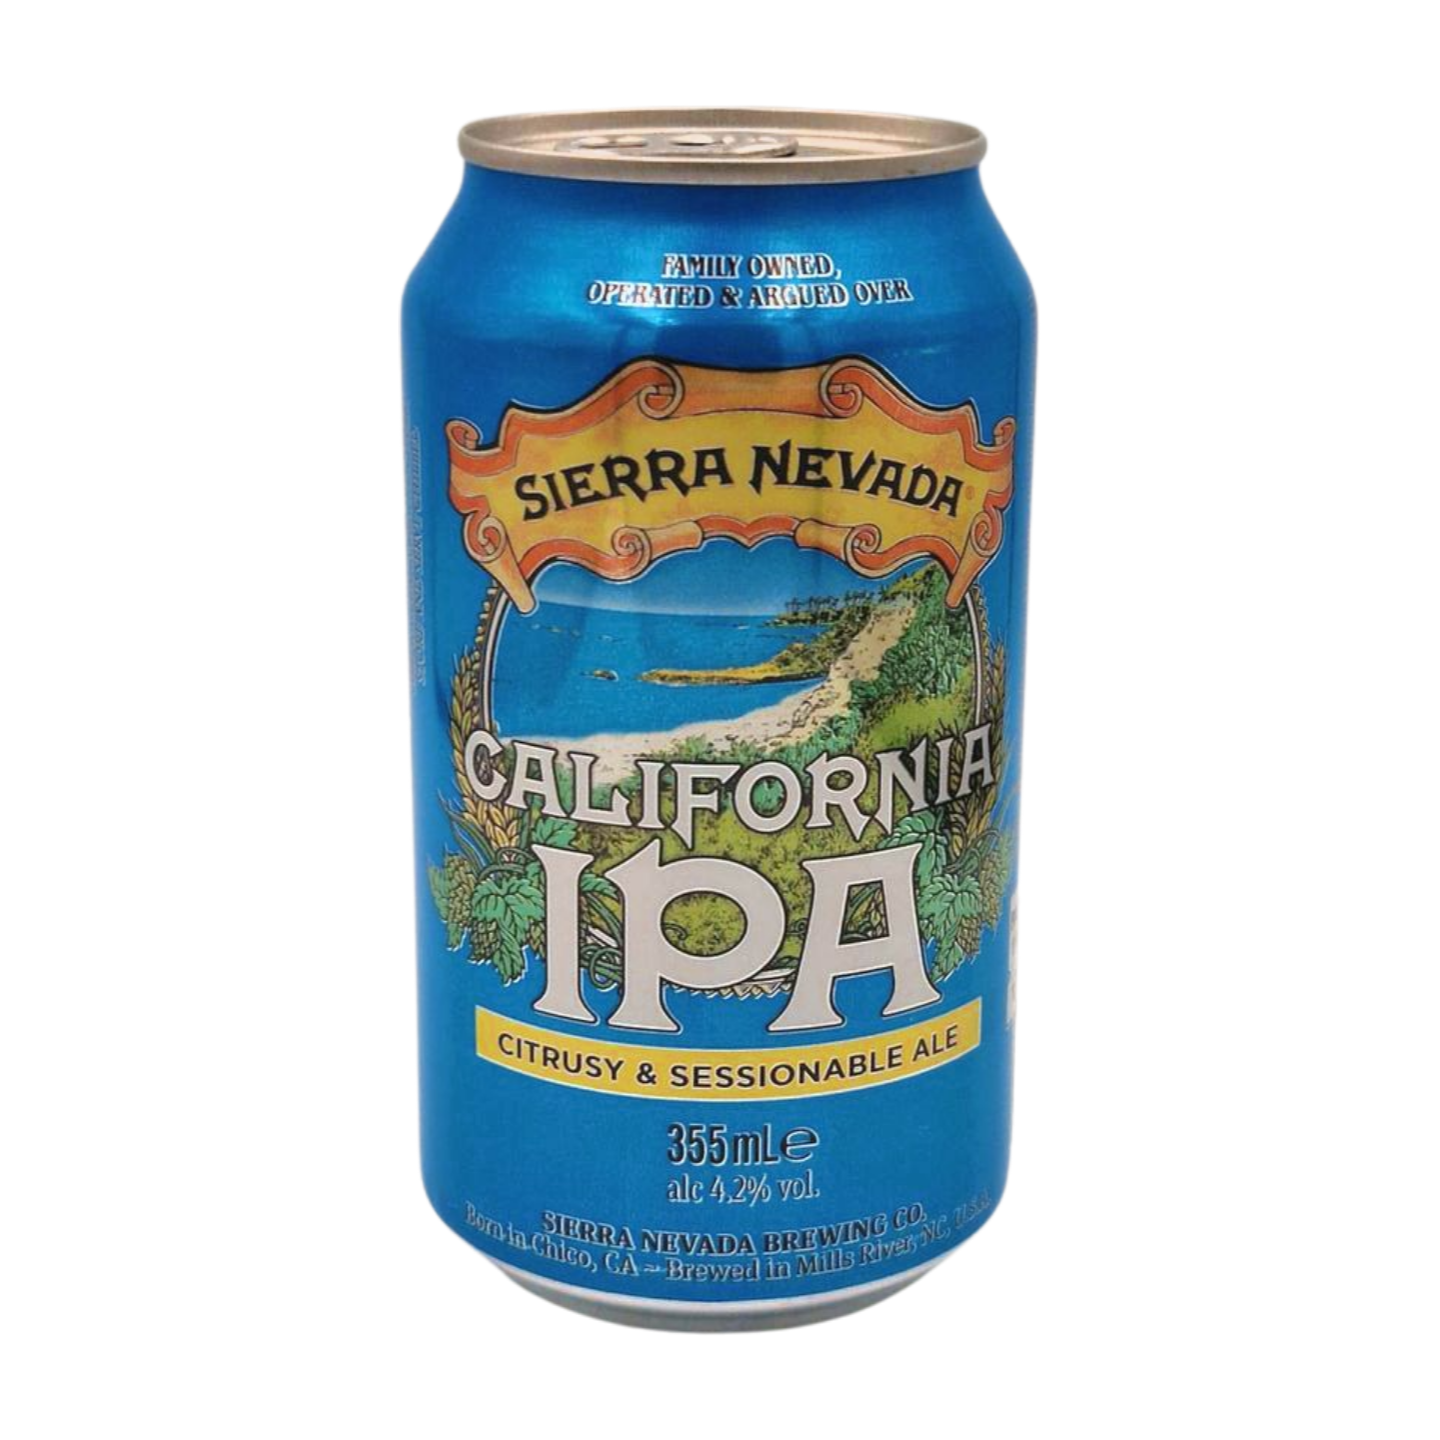 Sierra Nevada Brewing Co. California IPA | Session IPA Webshop Online Verdins Bierwinkel Rotterdam